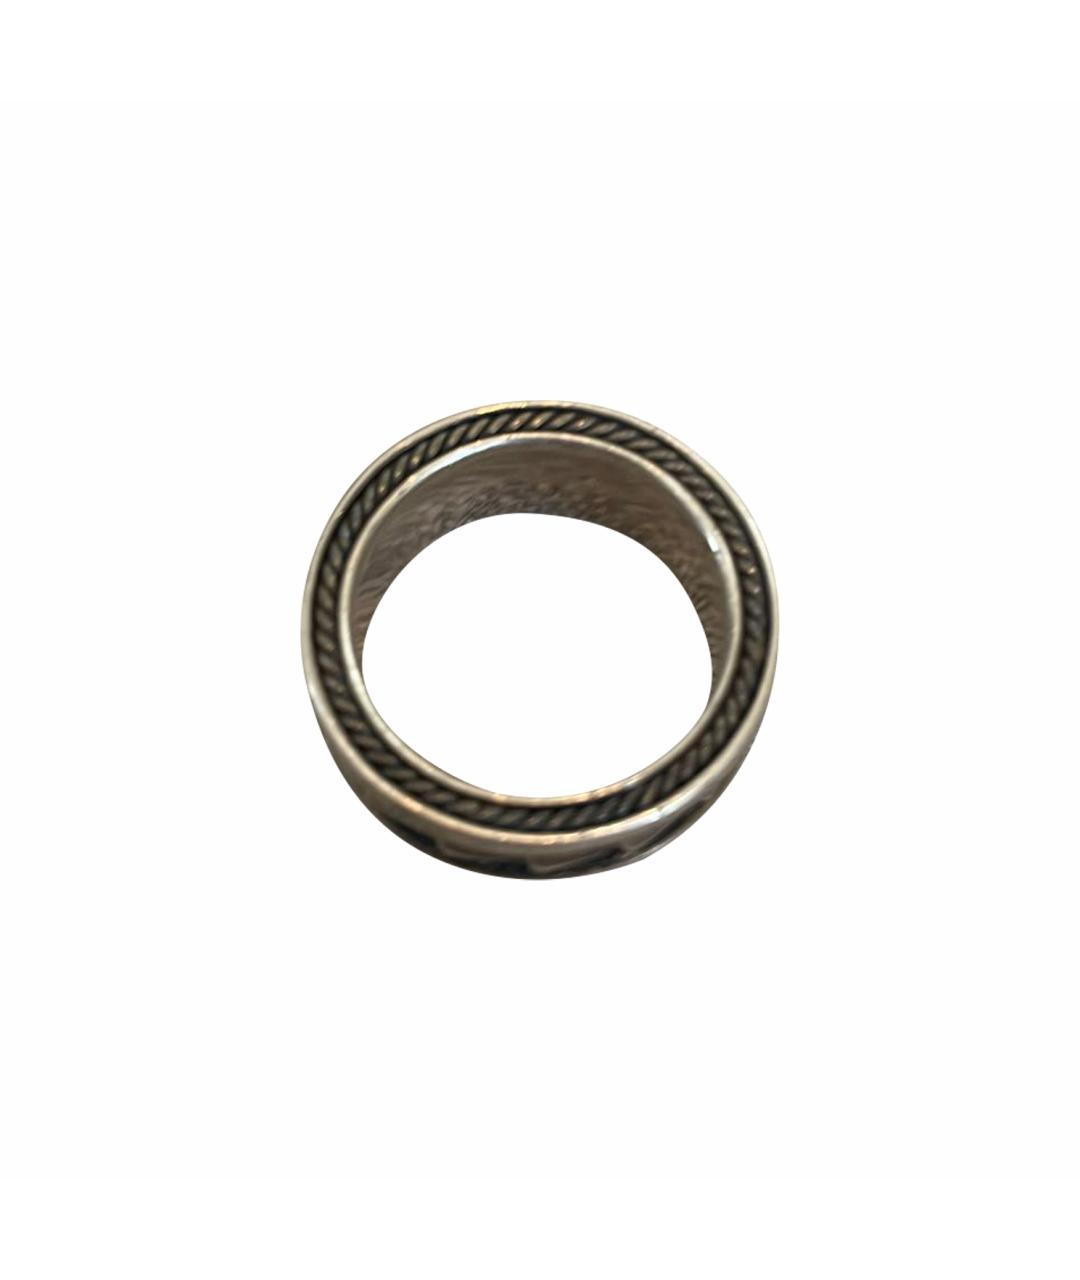 David Yurman Антрацитовое серебряное кольцо, фото 1